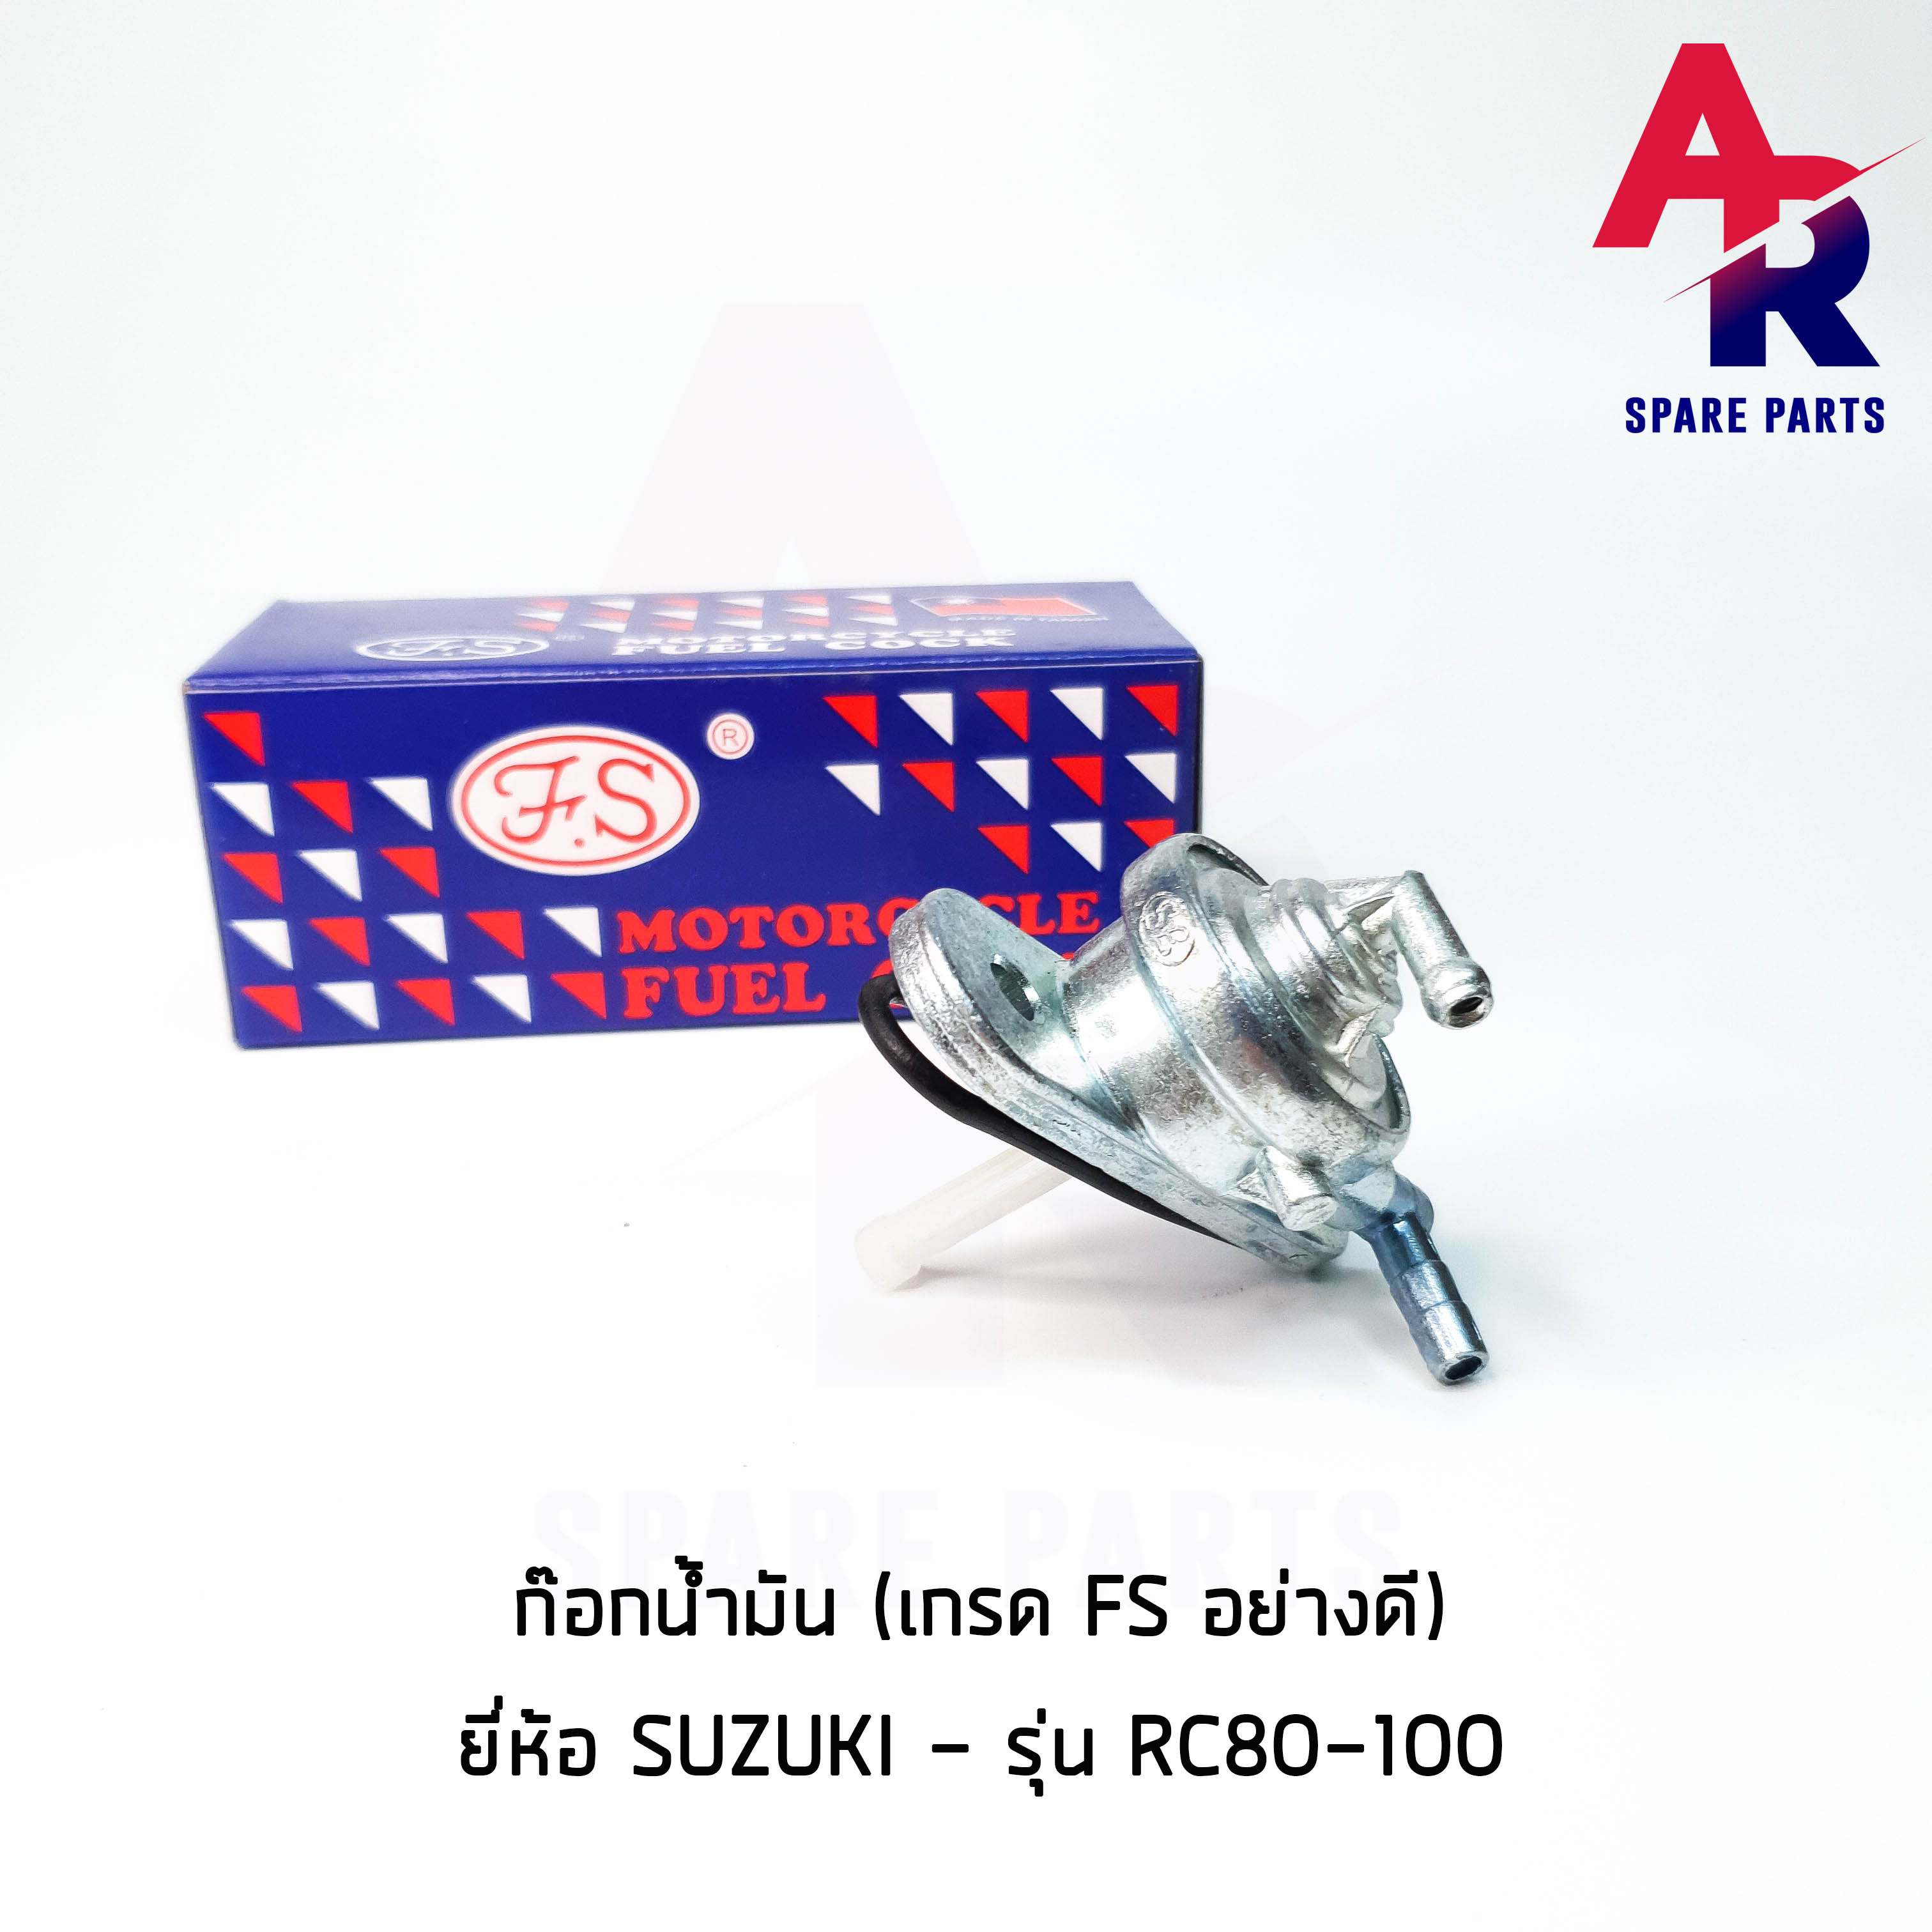 [FS] ก๊อกน้ำมัน SUZUKI - RC80-100 เกรด FS อย่างดี